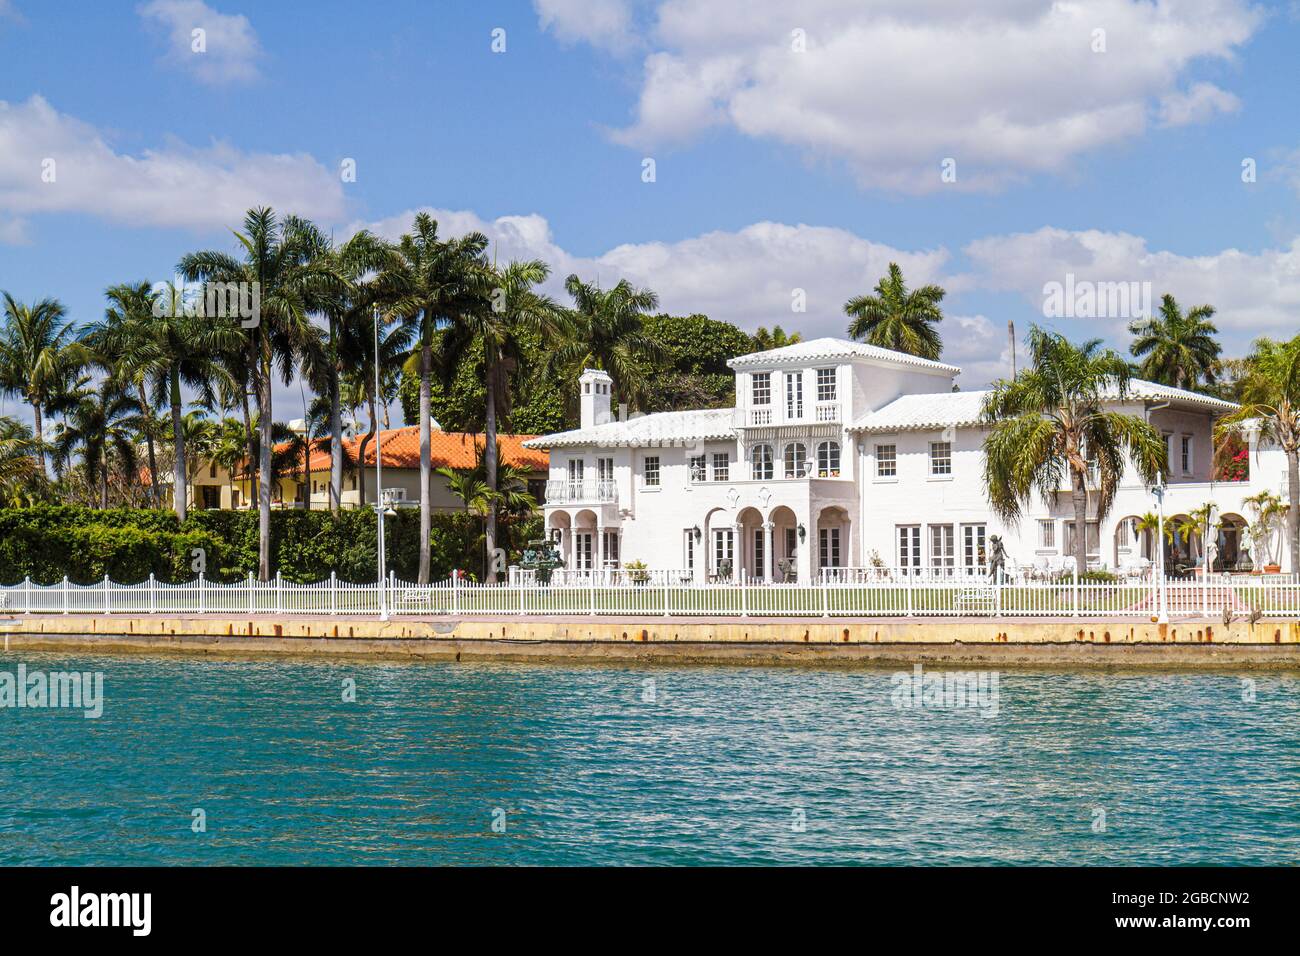 Miami Beach Florida,Biscayne Bay Star Island,42 Star Island Drive waterfront home,mansion Scarface movie set location Al Pacino, Stock Photo